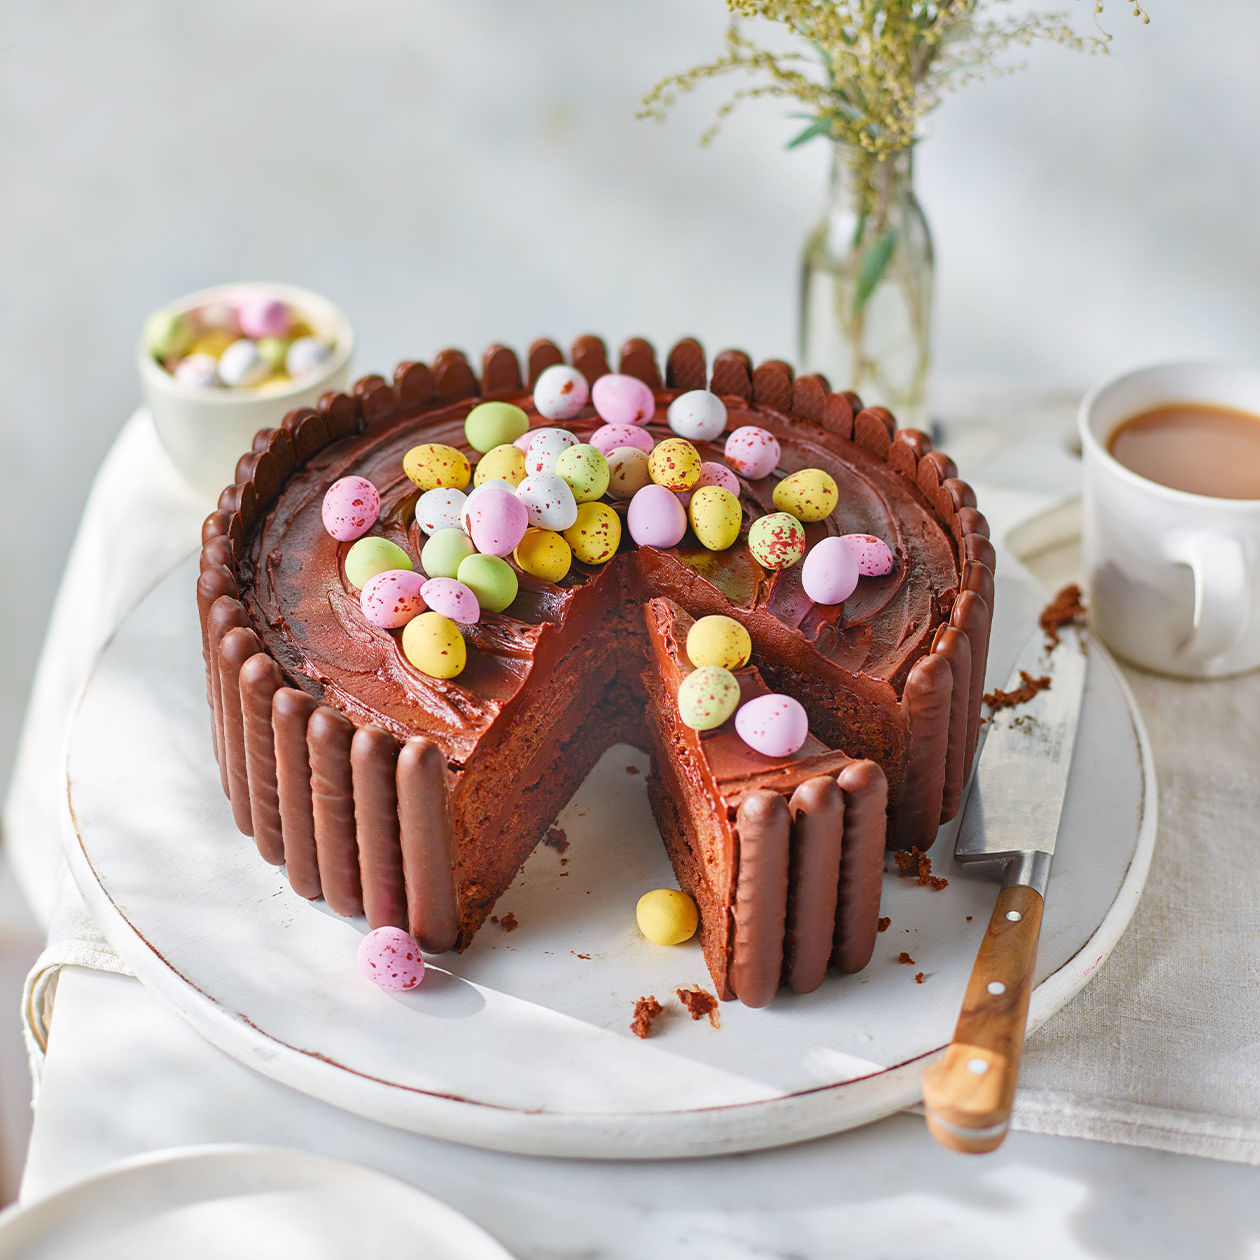 50 Easy Easter Cake Ideas 2023 - Cute Easter Cake Recipes